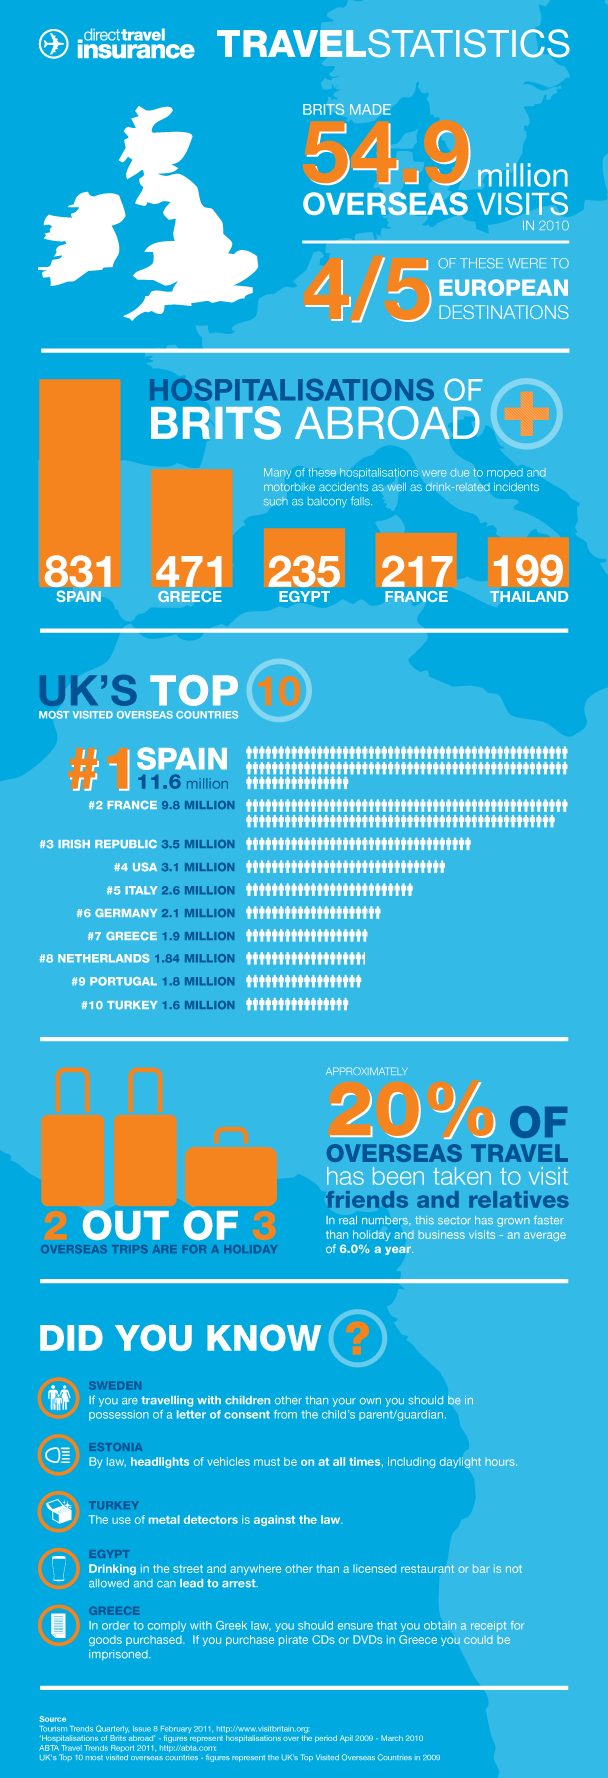 Direct Travel Travel statistics infographic